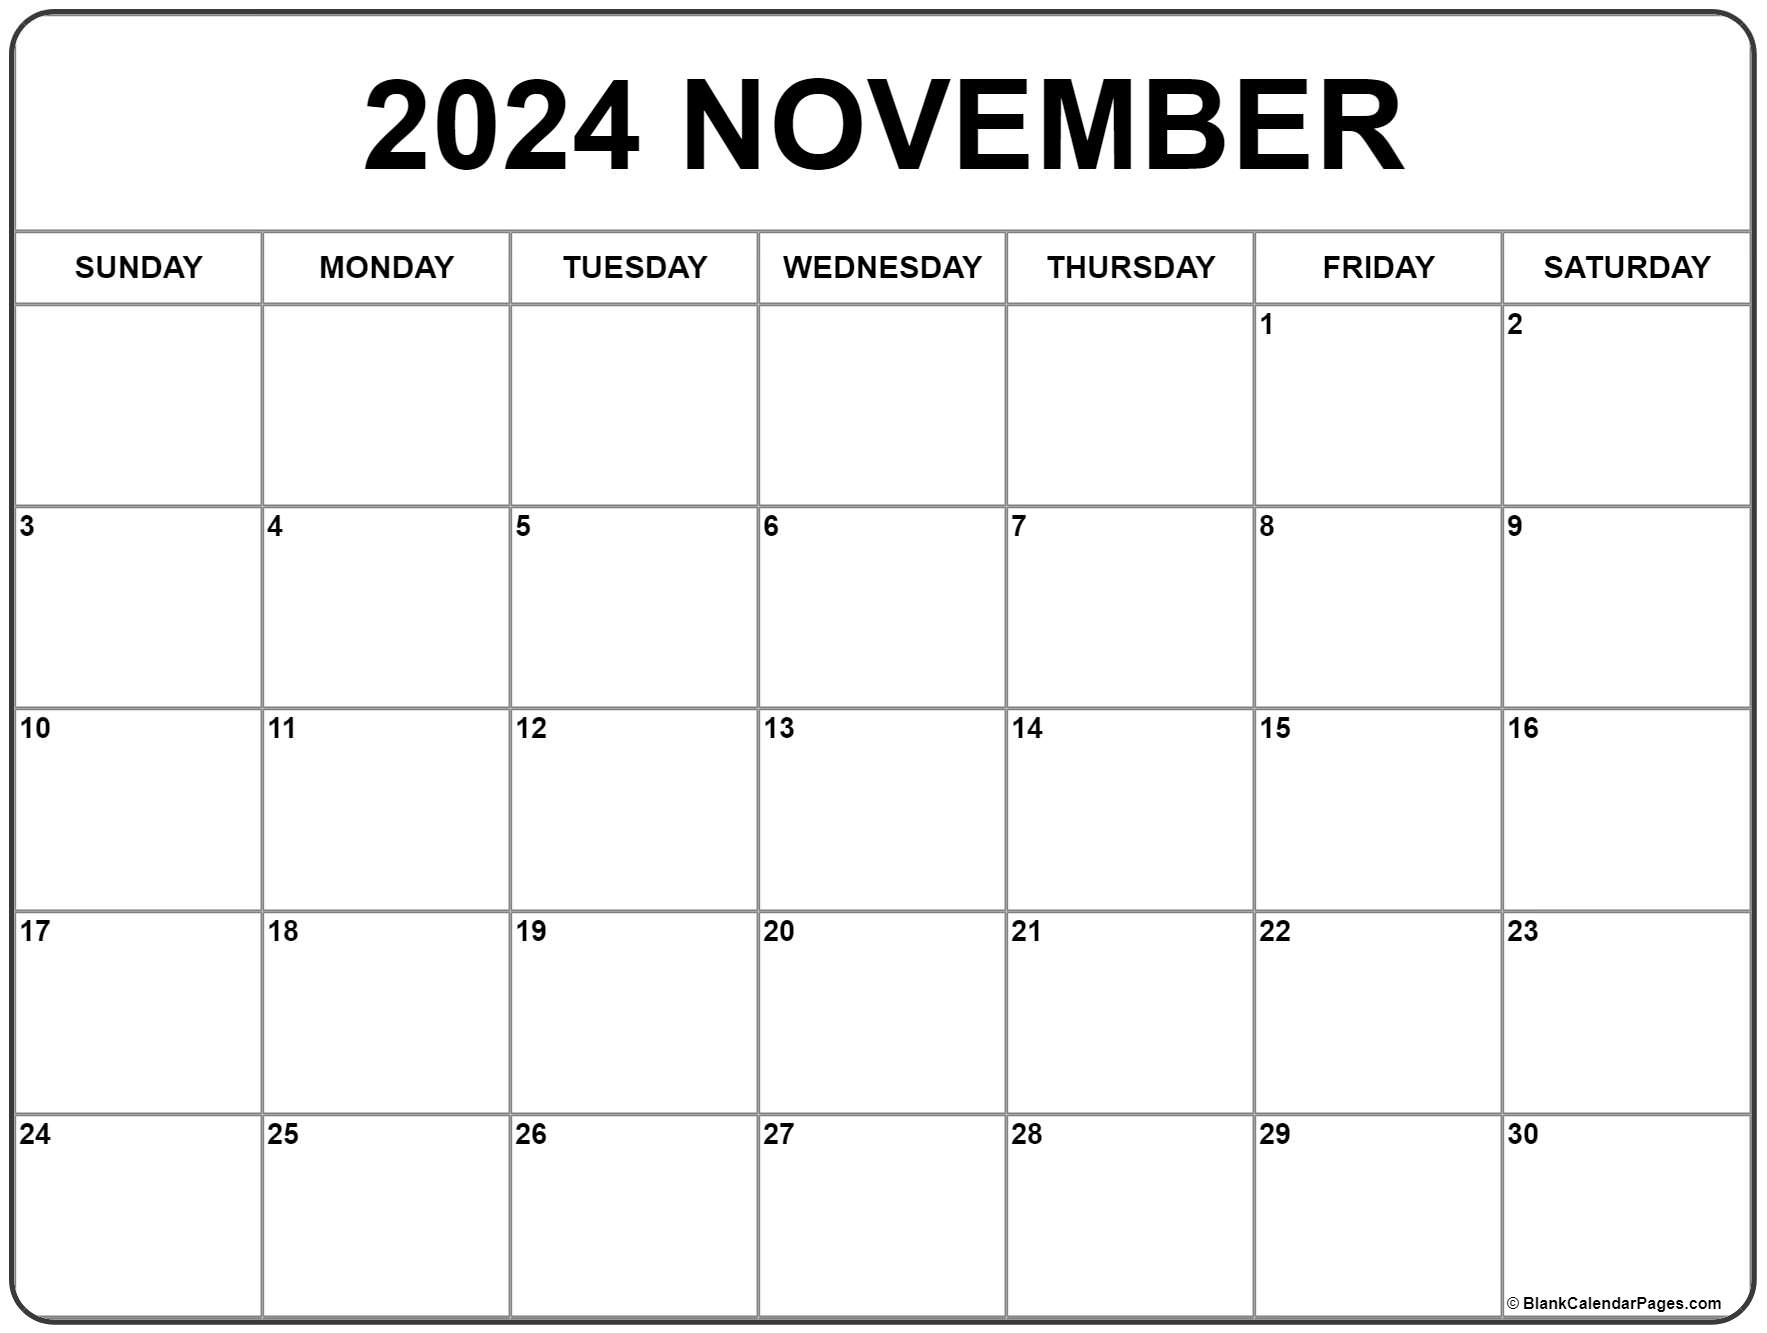 November 2024 Calendar | Free Printable Calendar | Printable Calendar Nov 2024